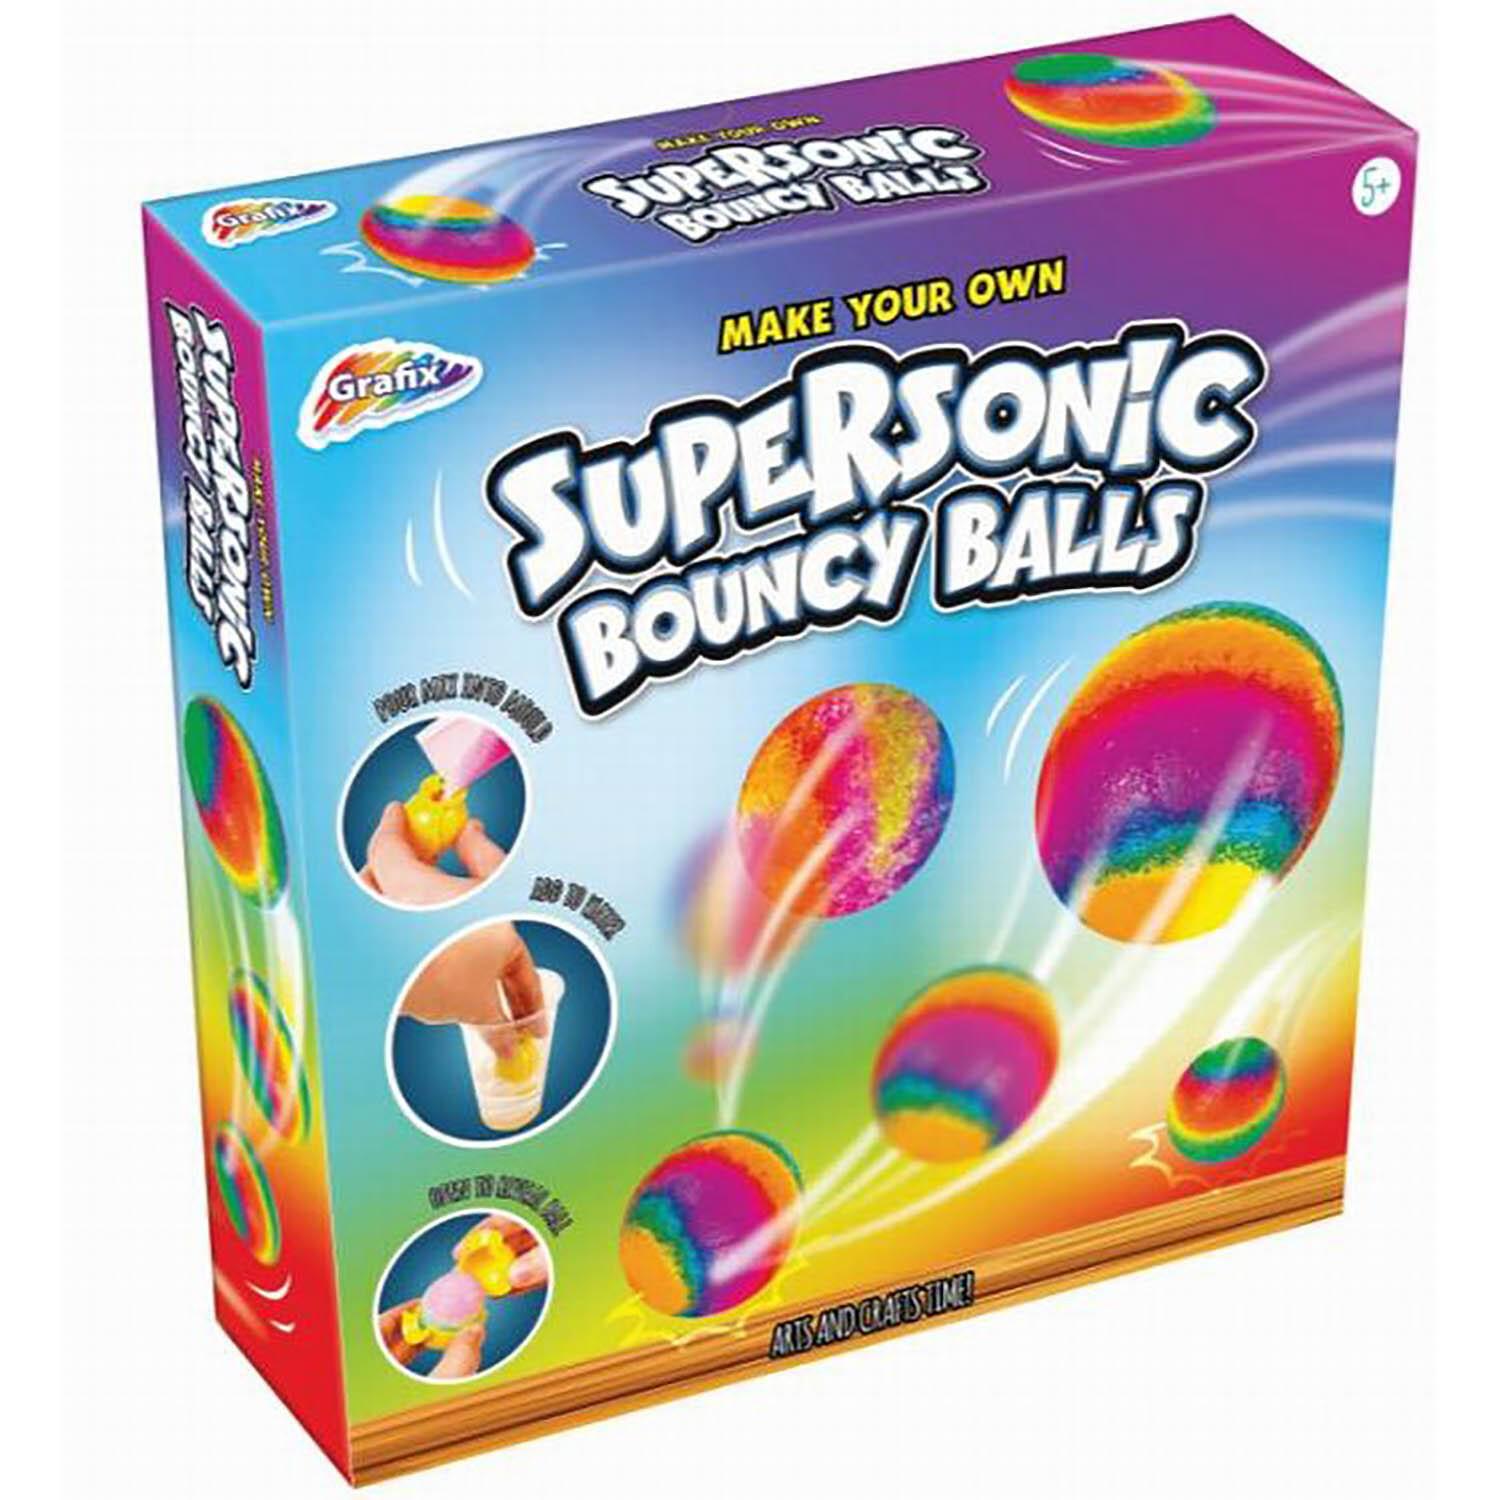 Grafix MYO Supersonic Bouncy Balls